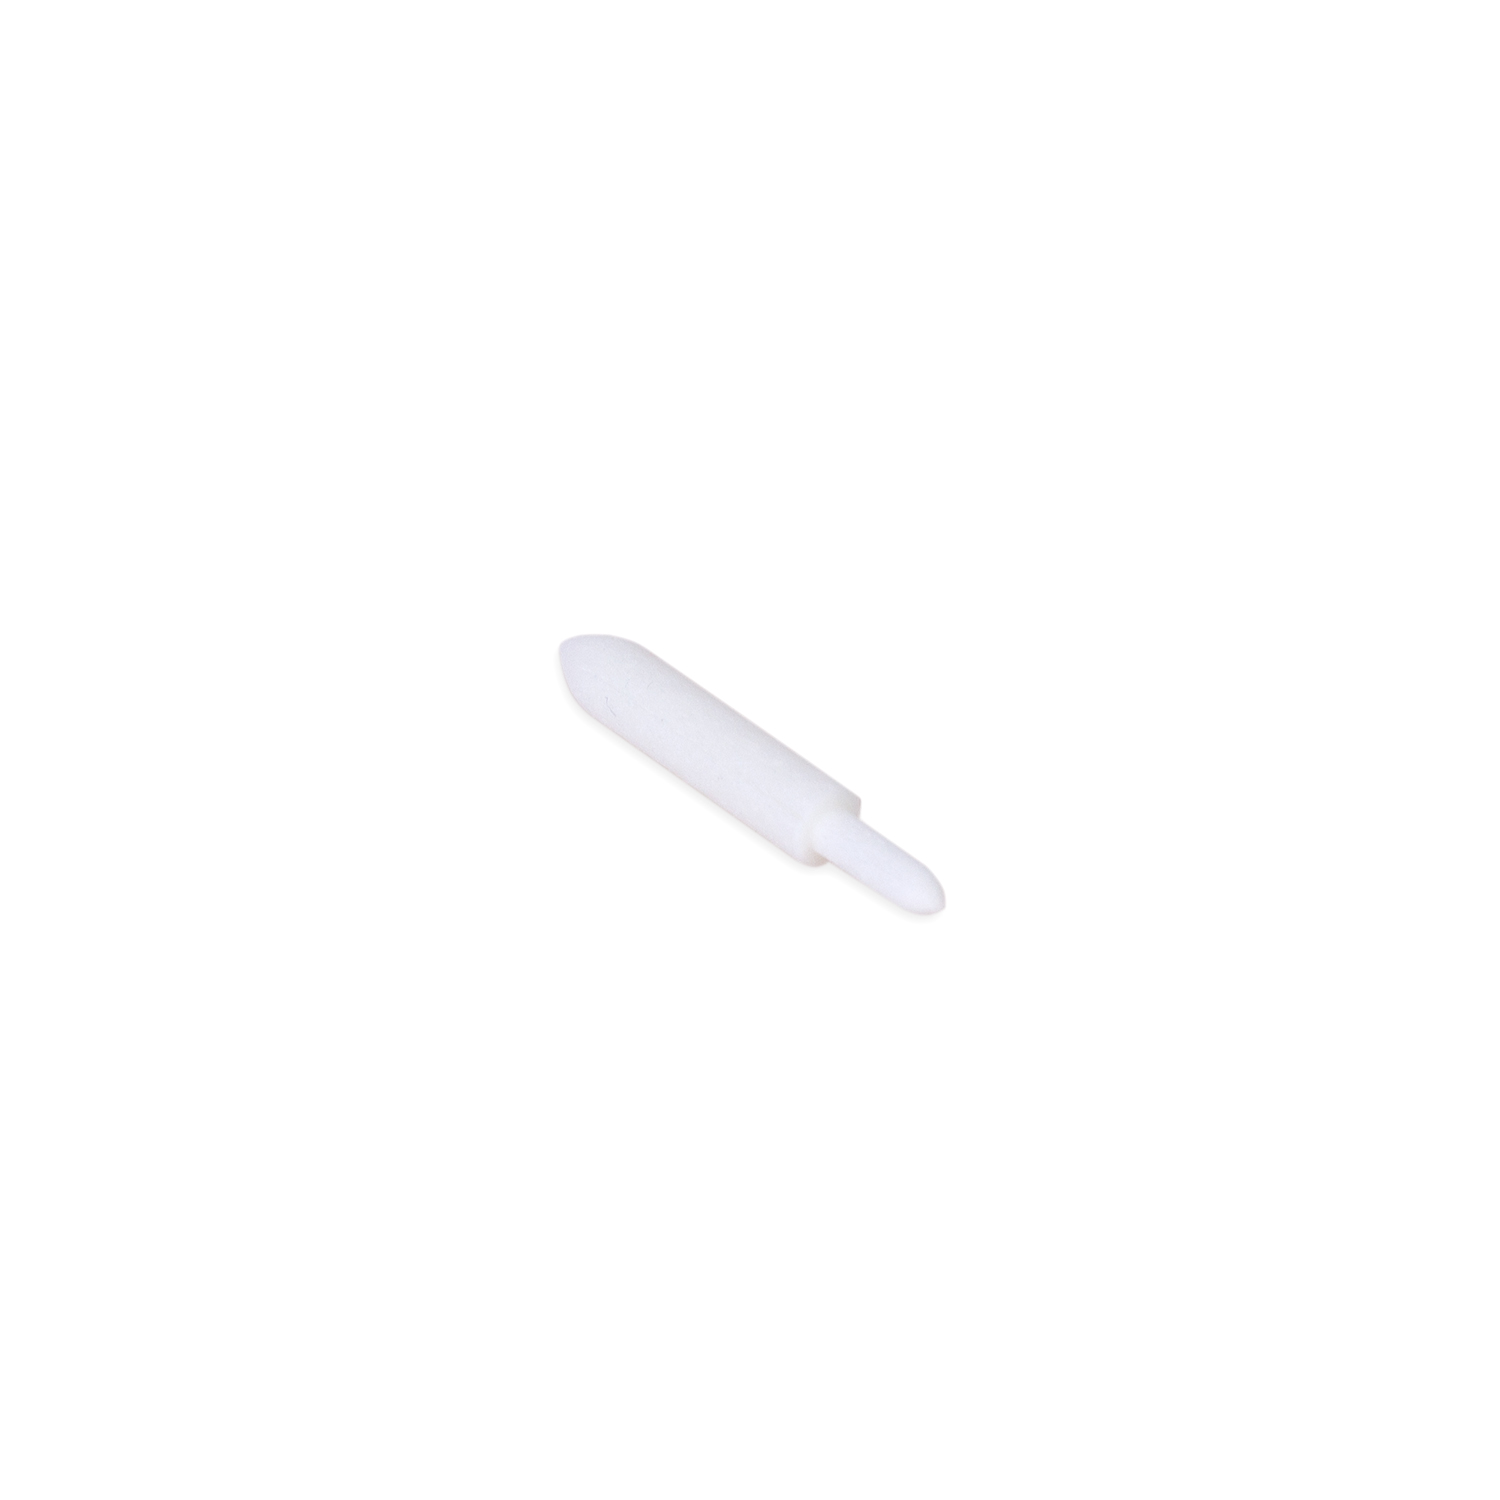 Feltro bianco con punta sottile Ø 2 mm (10 pz.)